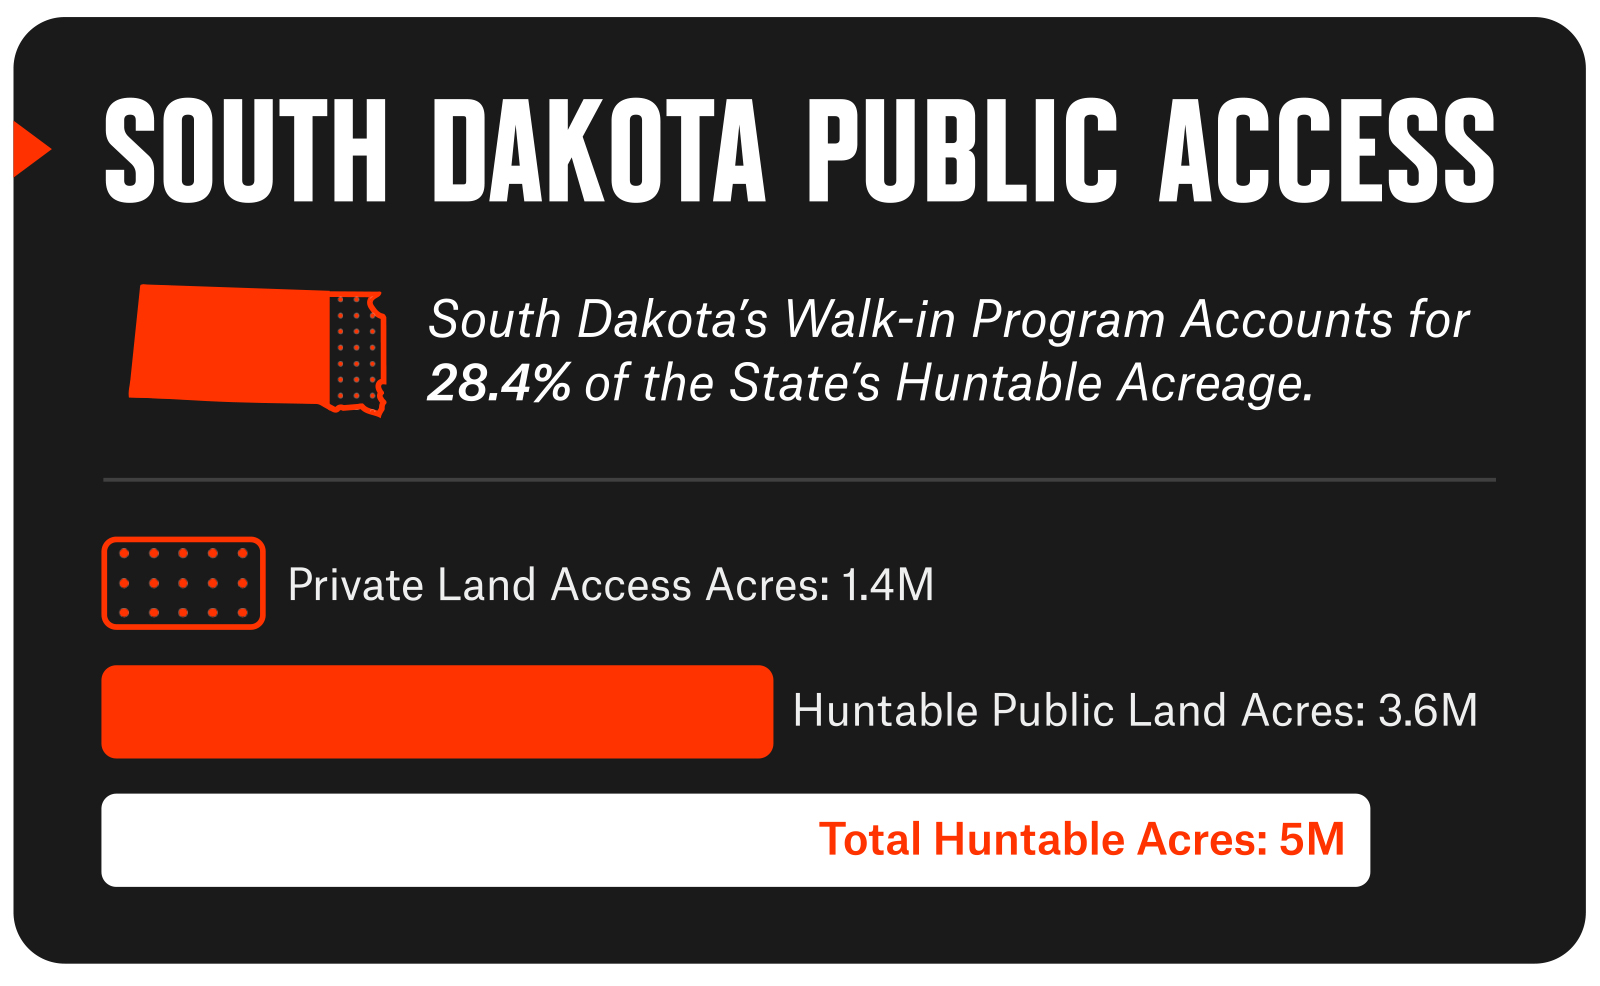 South Dakota public access walk-in program statistics.